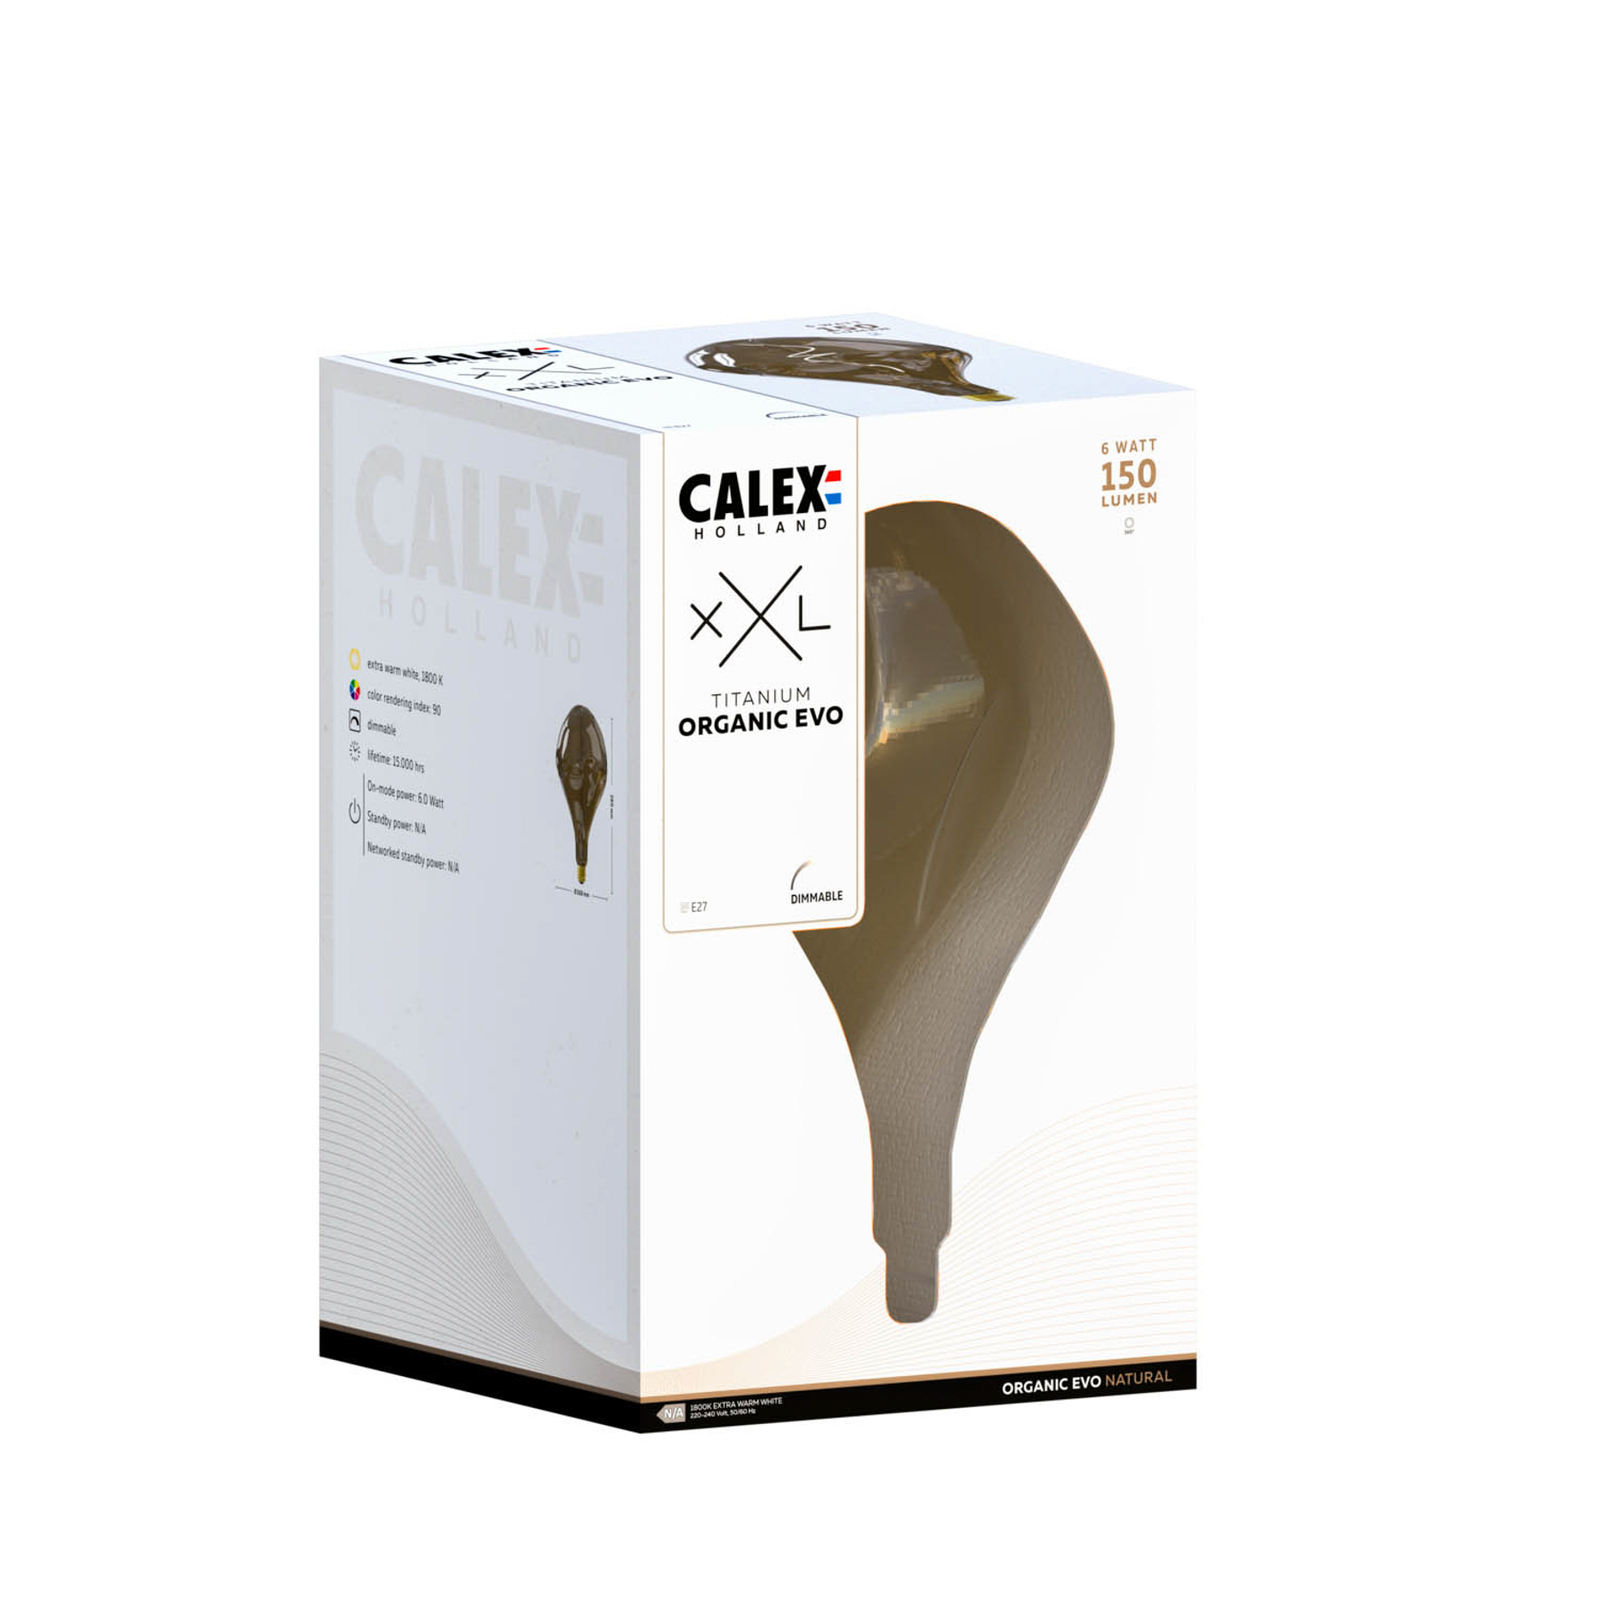 Calex Organic Evo bombilla LED E27 6W dim natural